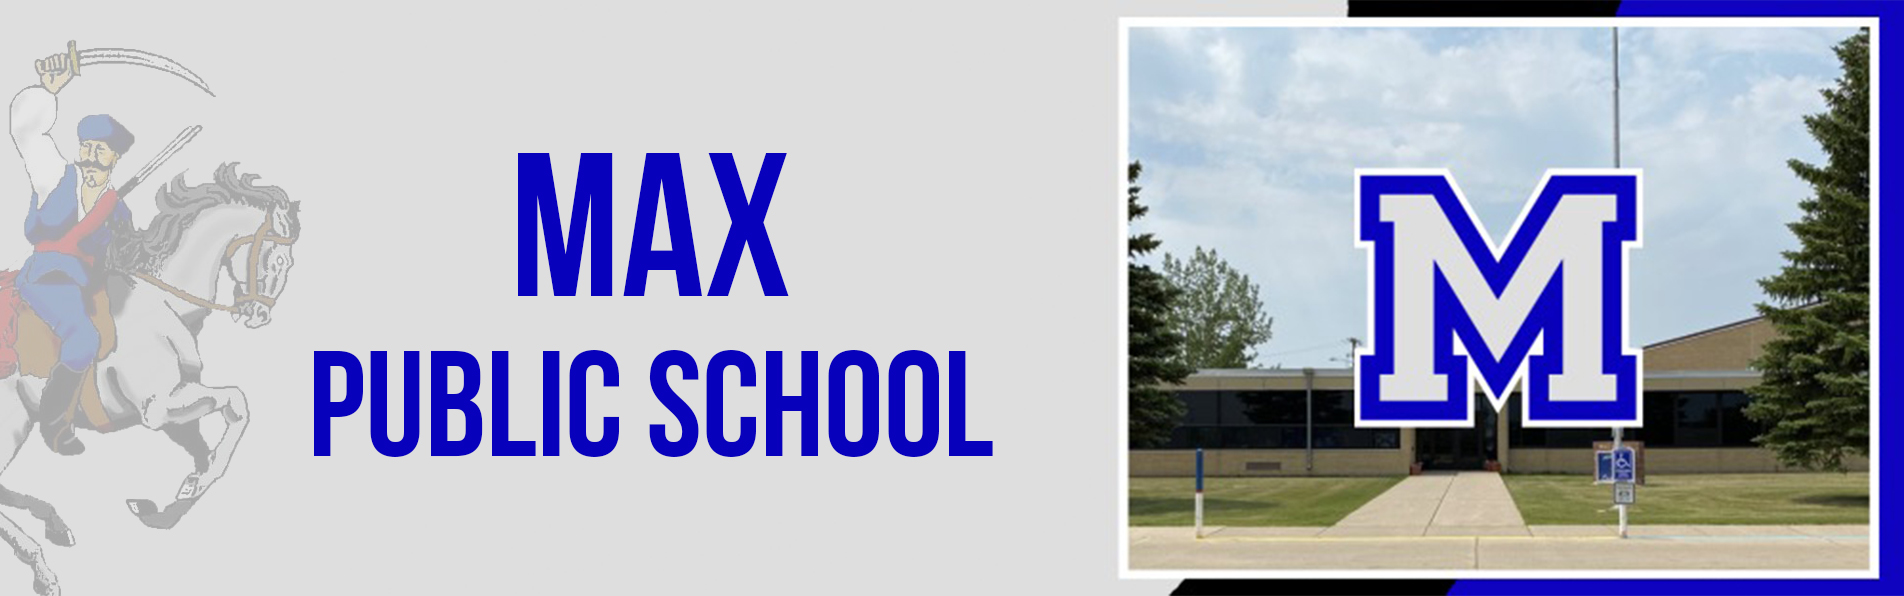 max public school